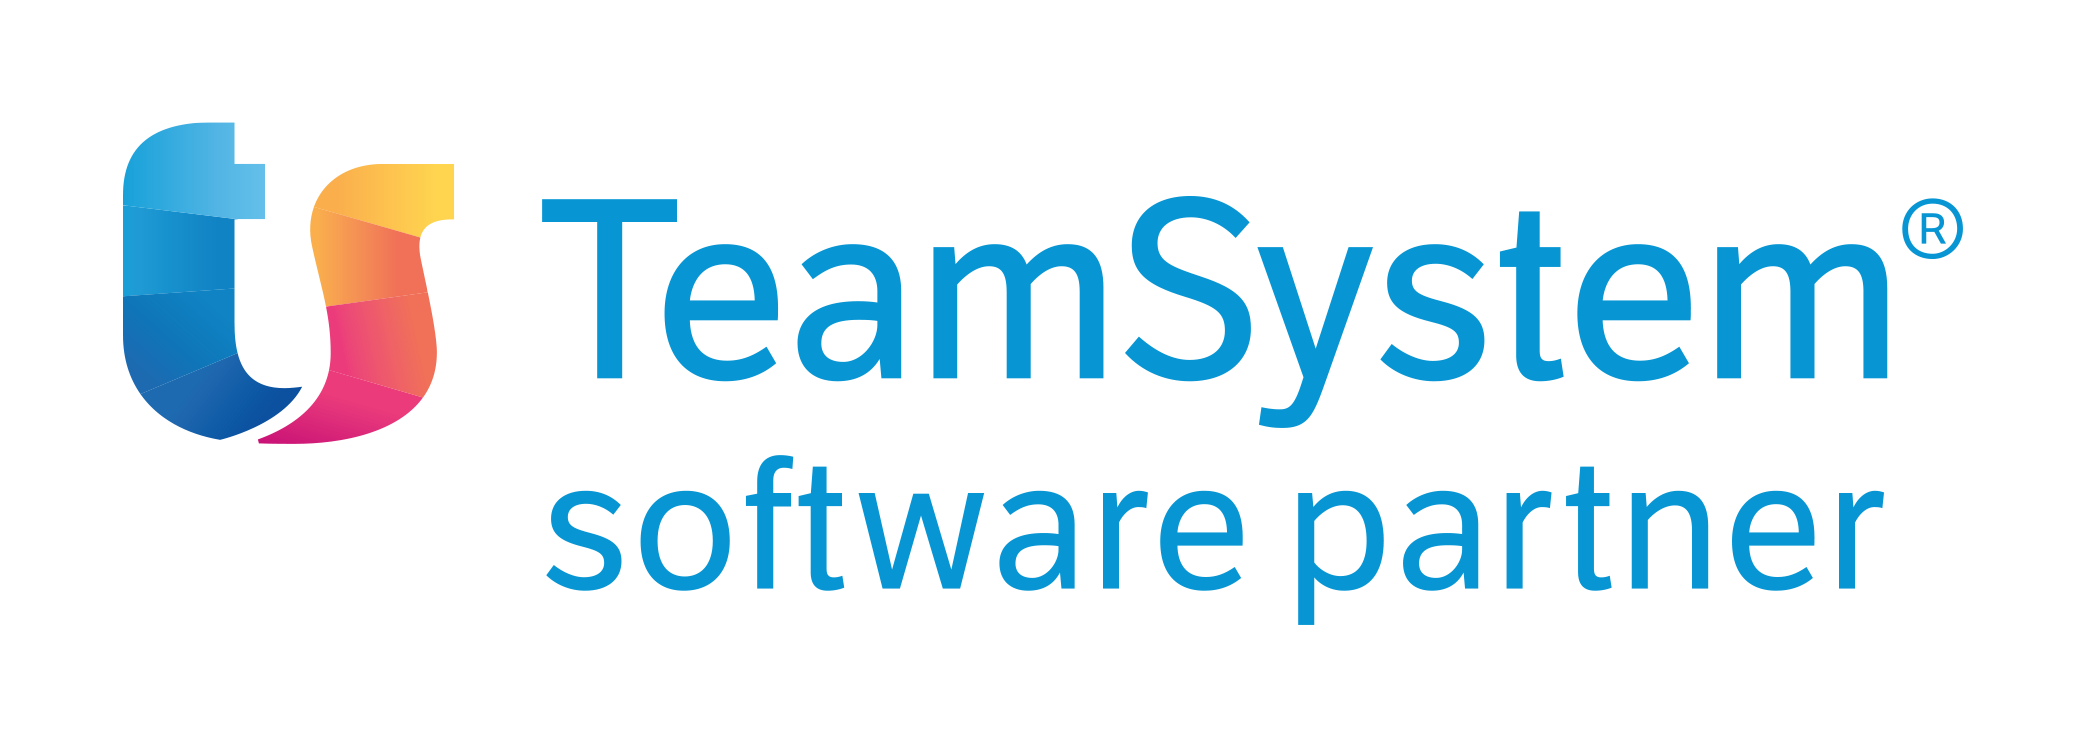 TeamSystem software partner